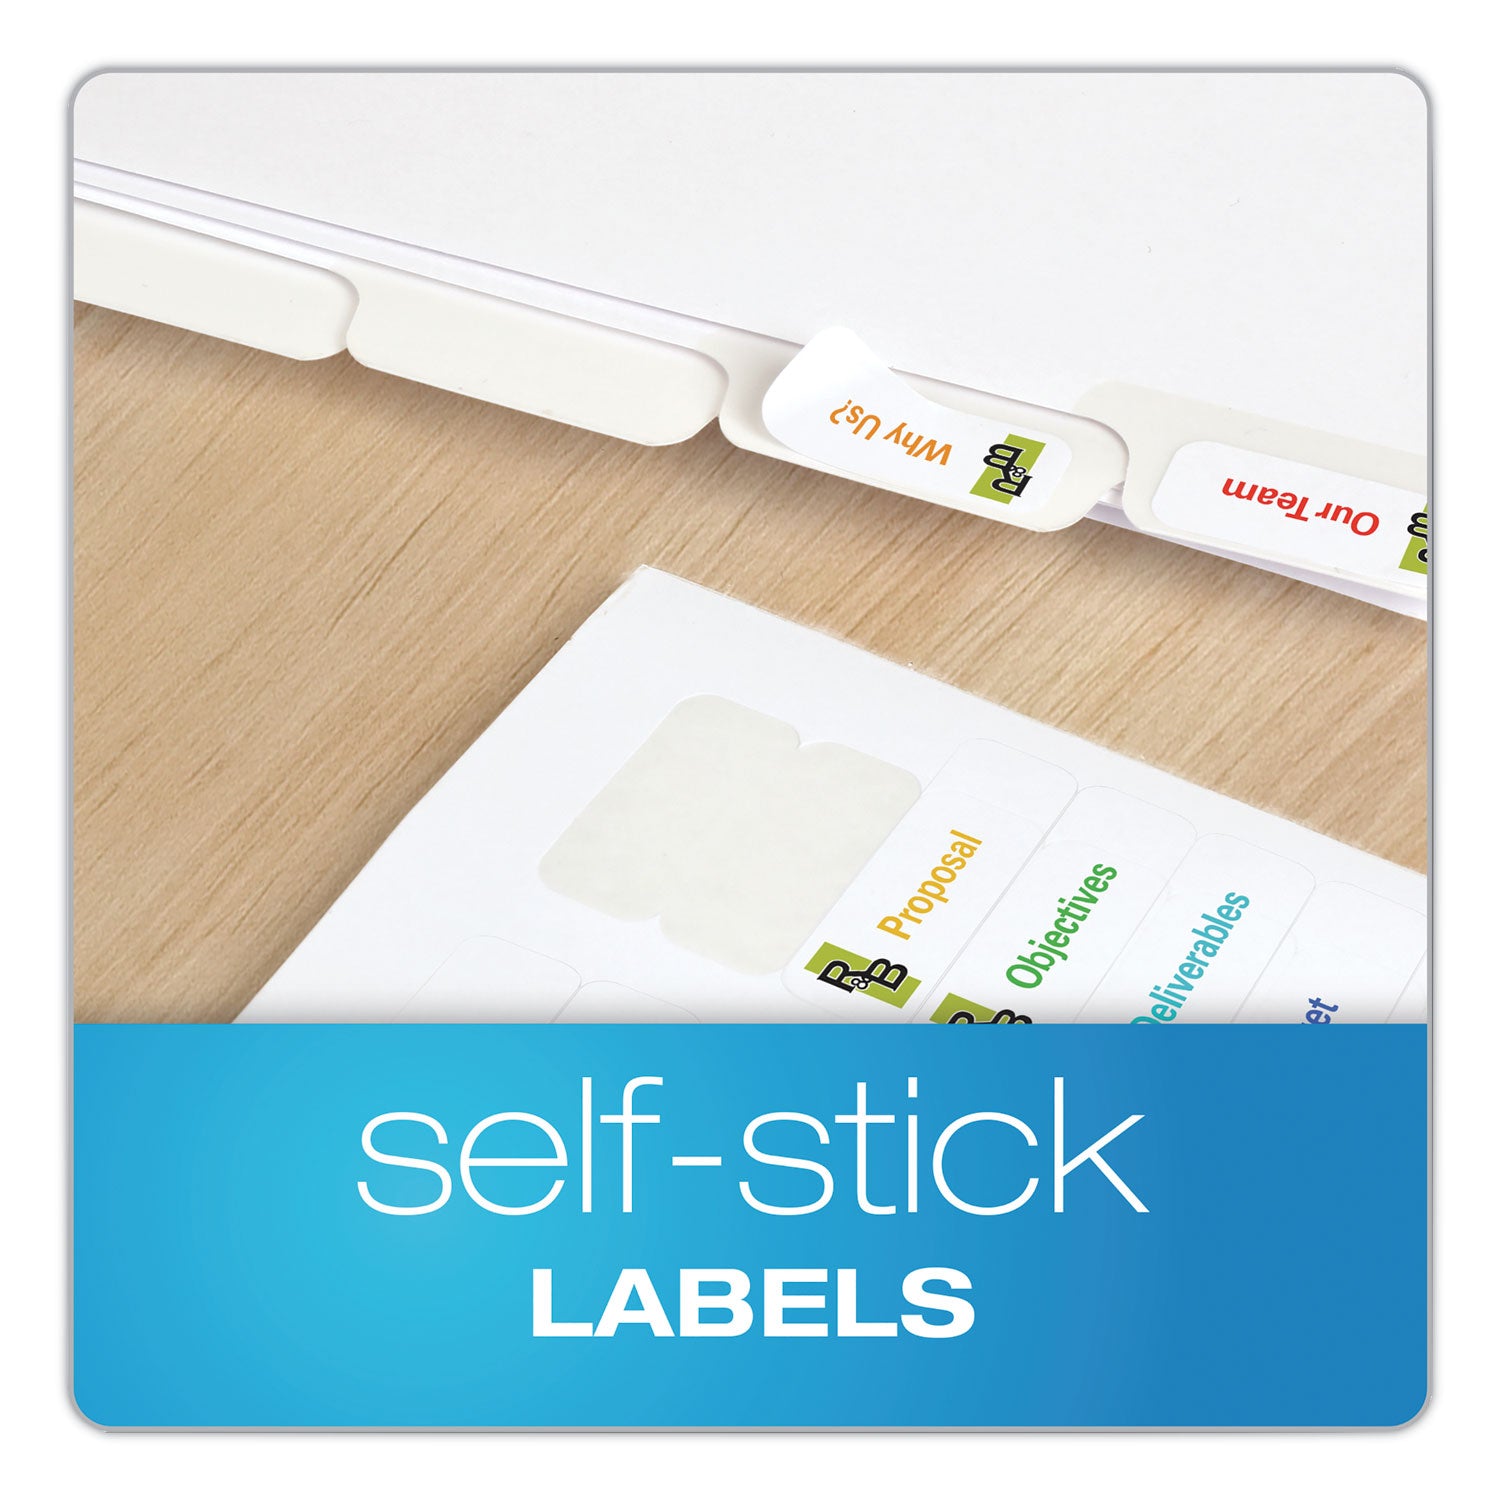 Custom Label Tab Dividers with Self-Adhesive Tab Labels, 8-Tab, 11 x 8.5, White, 25 Sets - 